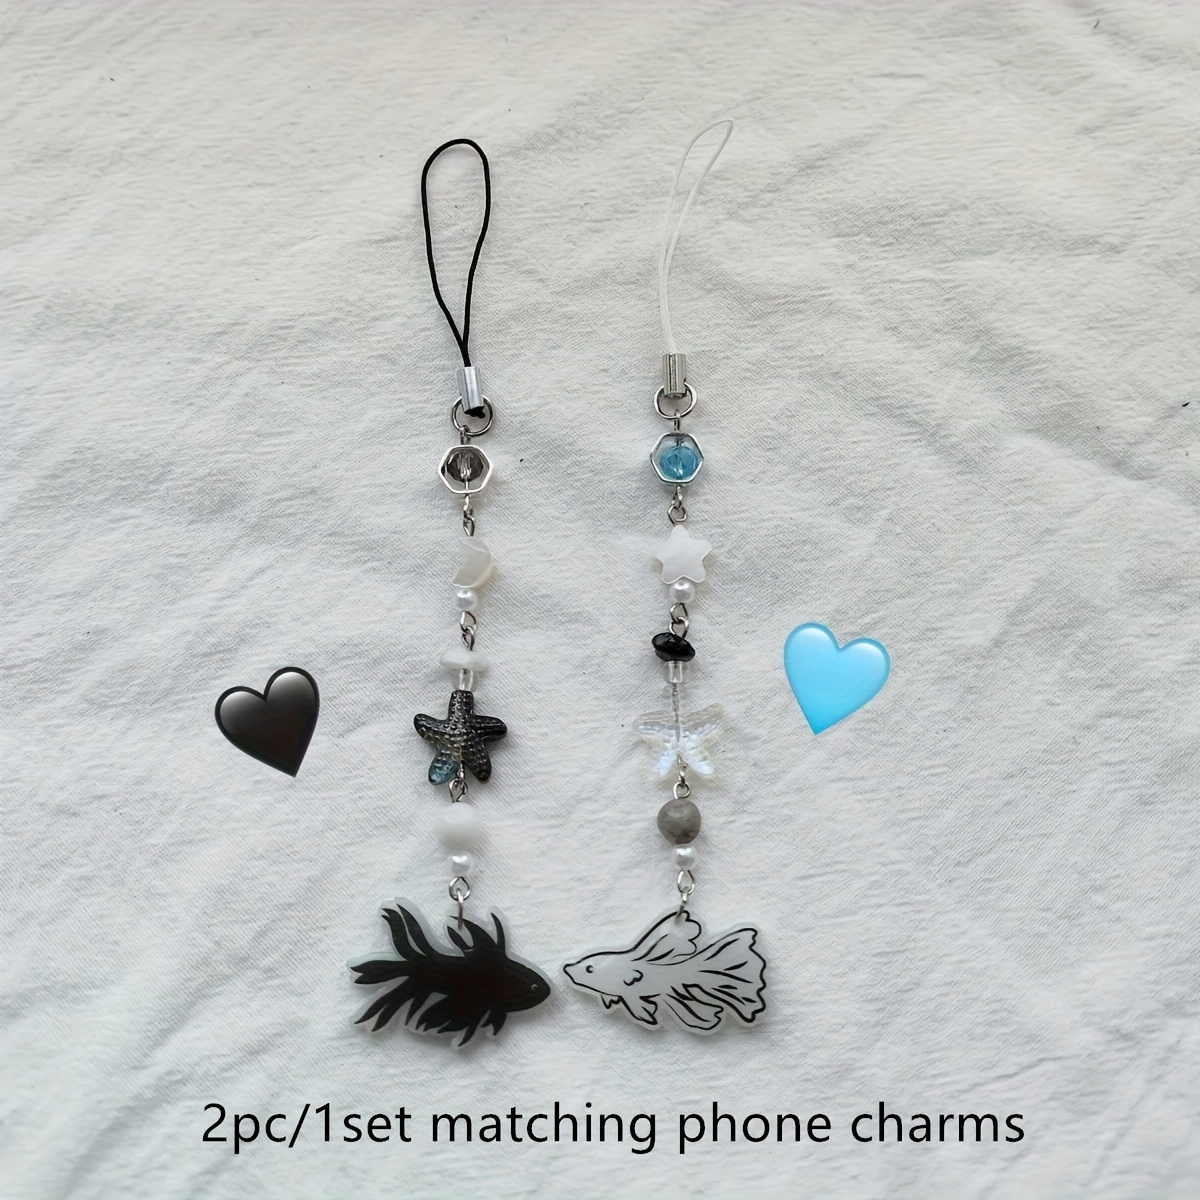 

2pcs/set Matching Phone Charms 1 Set Of Black And White Betta Fish Phone Charms